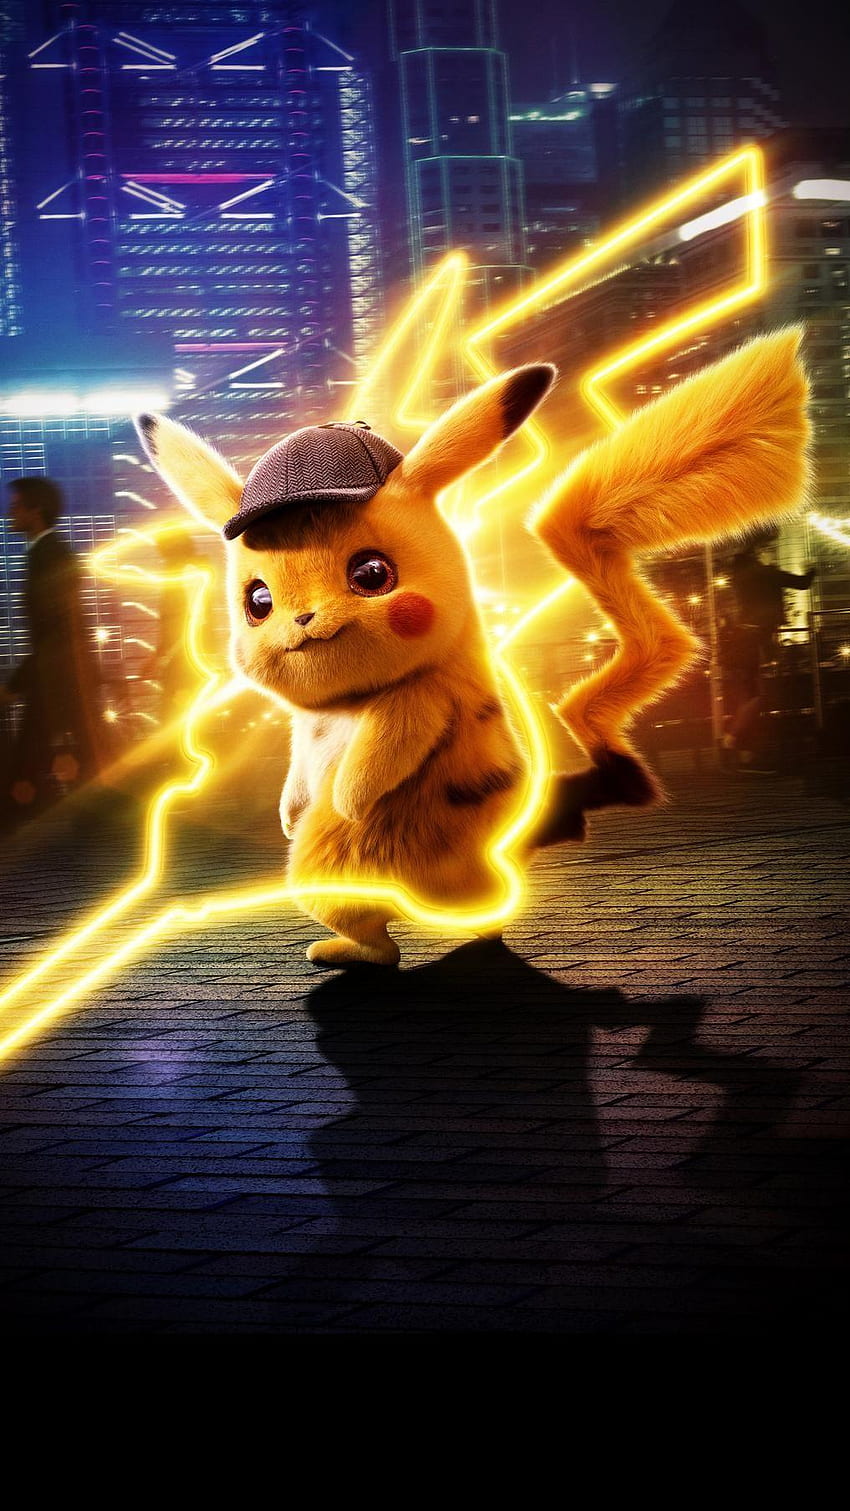 Pikachu, grzmot Tapeta na telefon HD